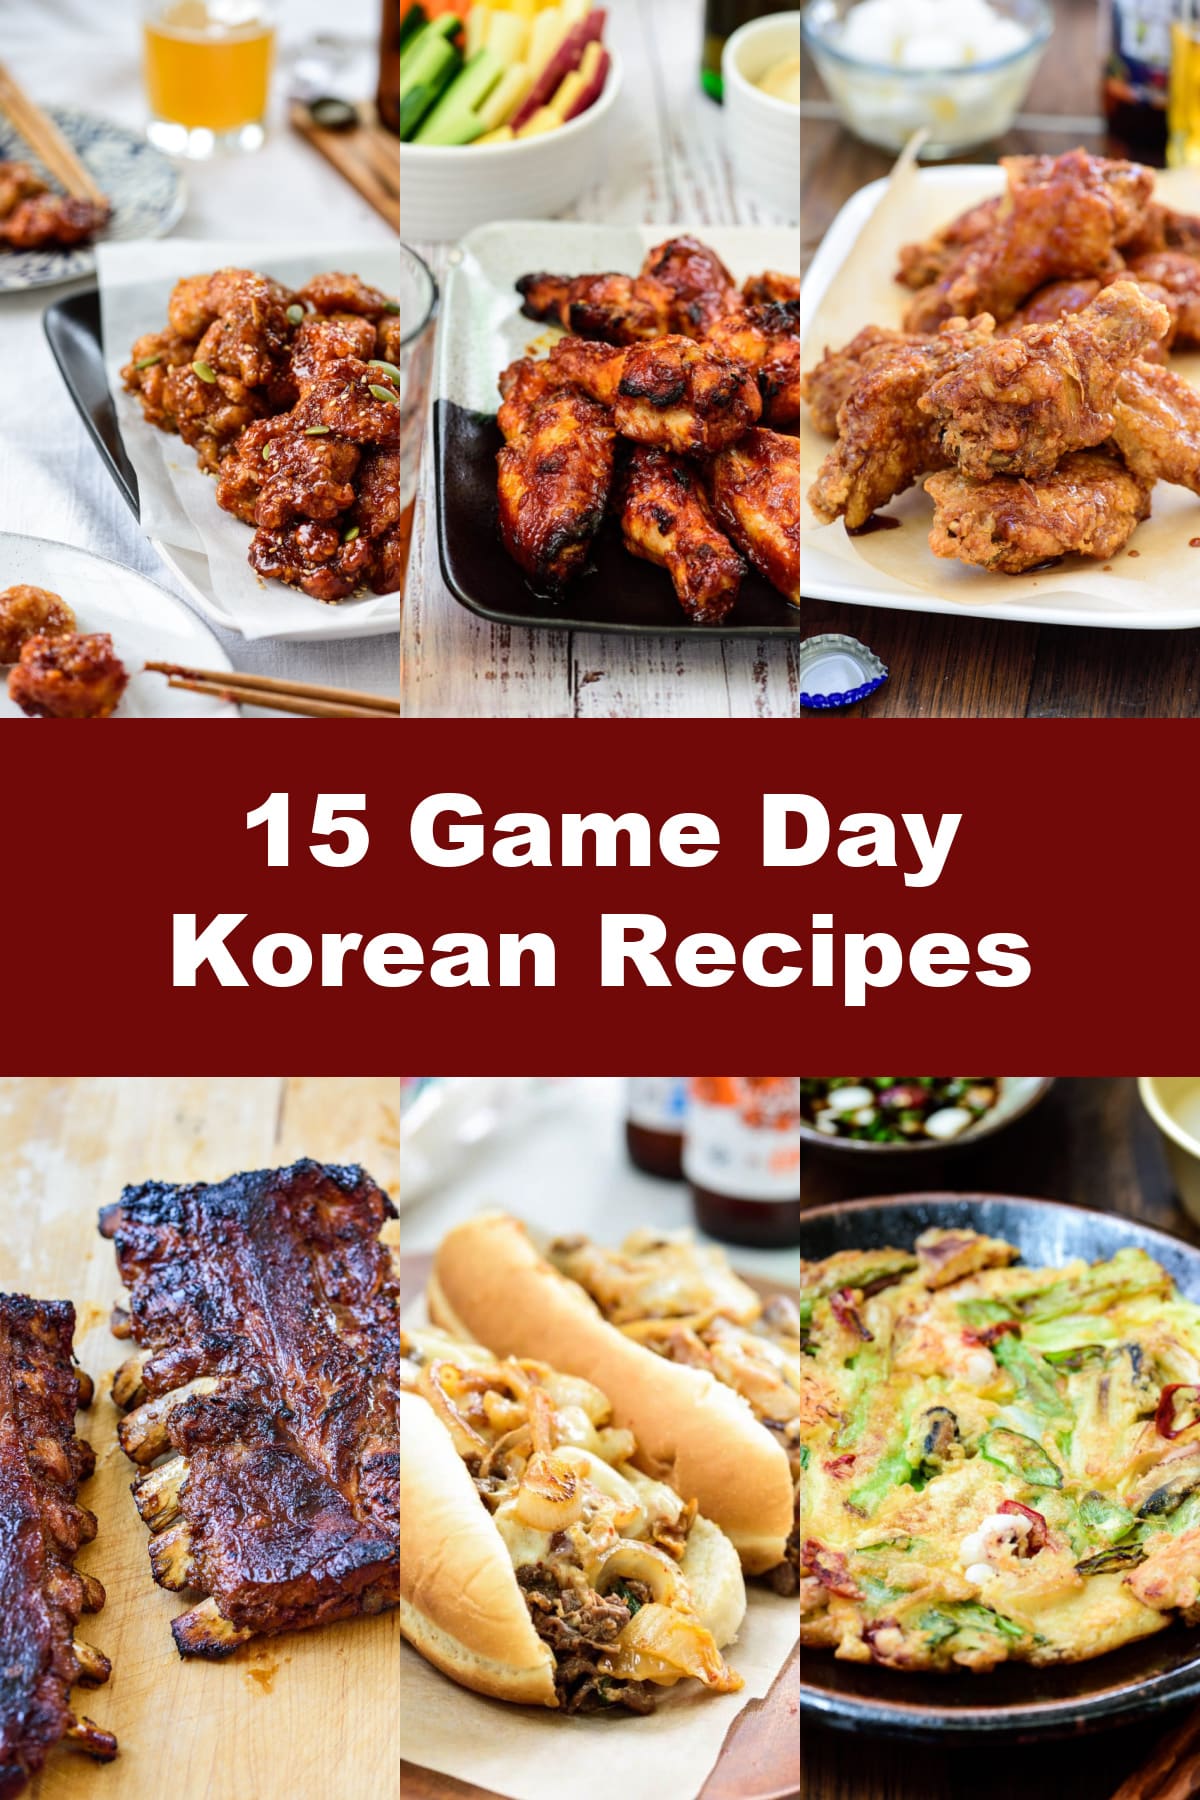 4 x 6 in copy - 15 Game Day Korean Recipes